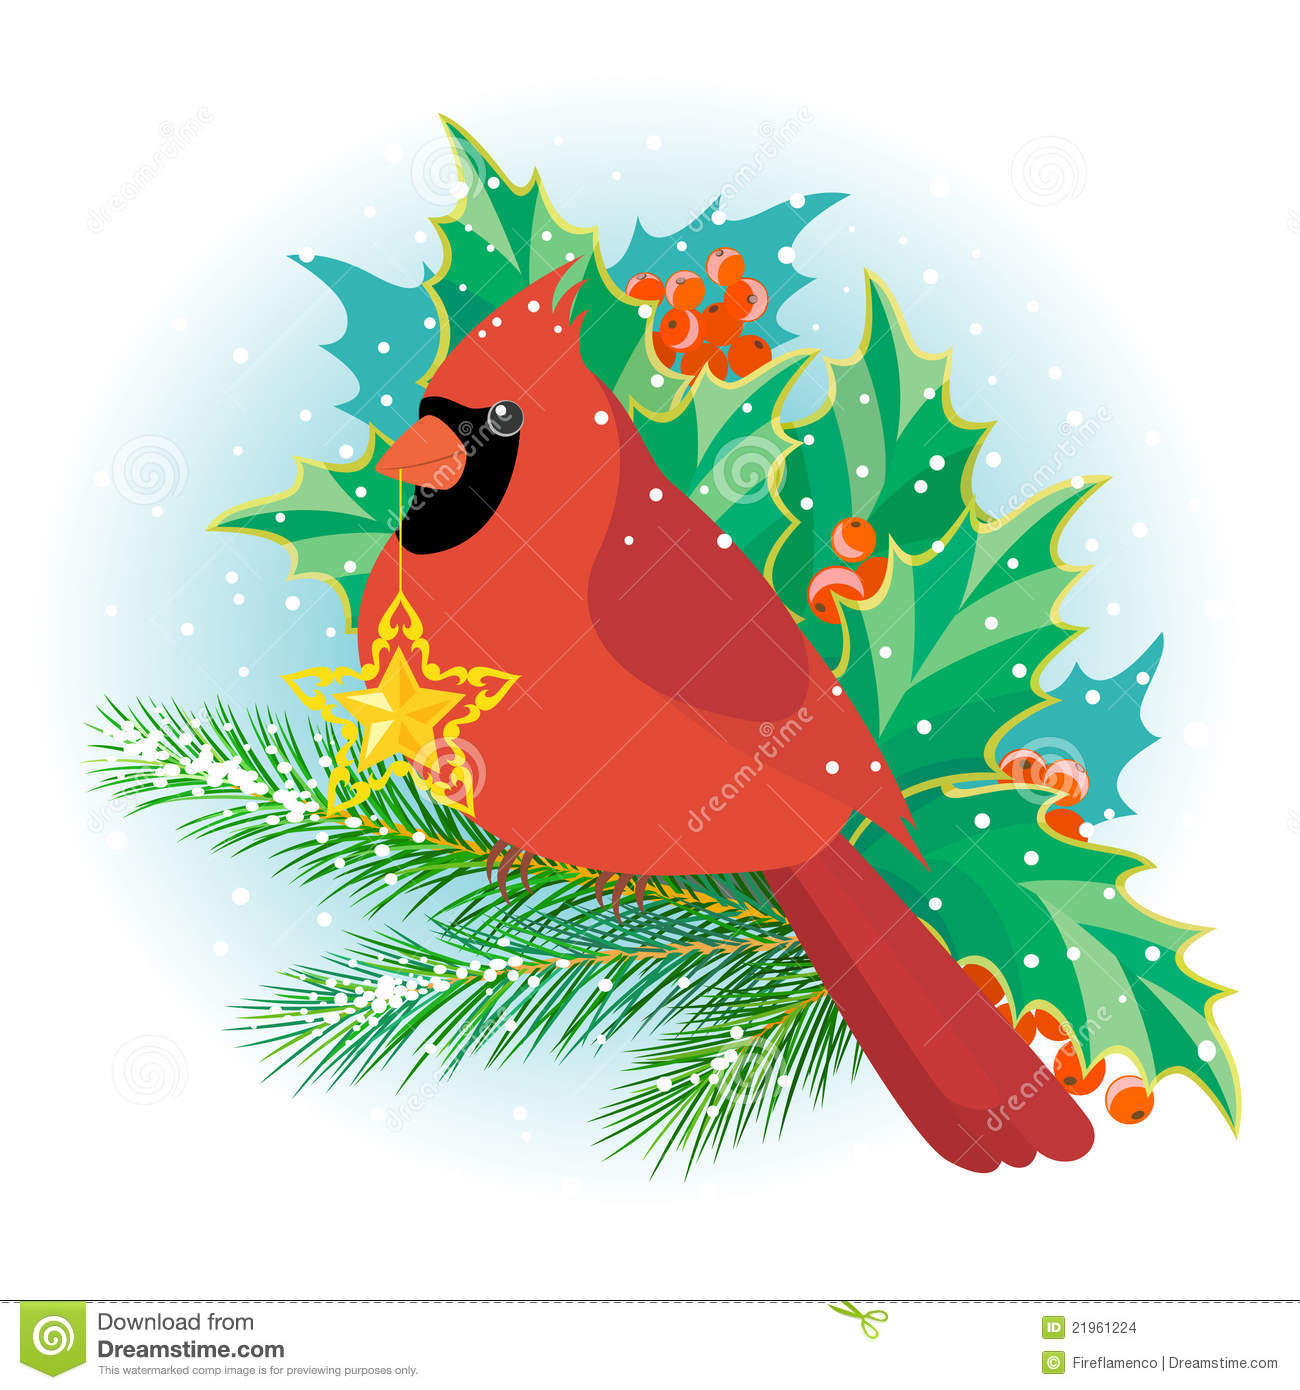 Illustration Of Cardinal Bird With Christmas Star On Pine Branch